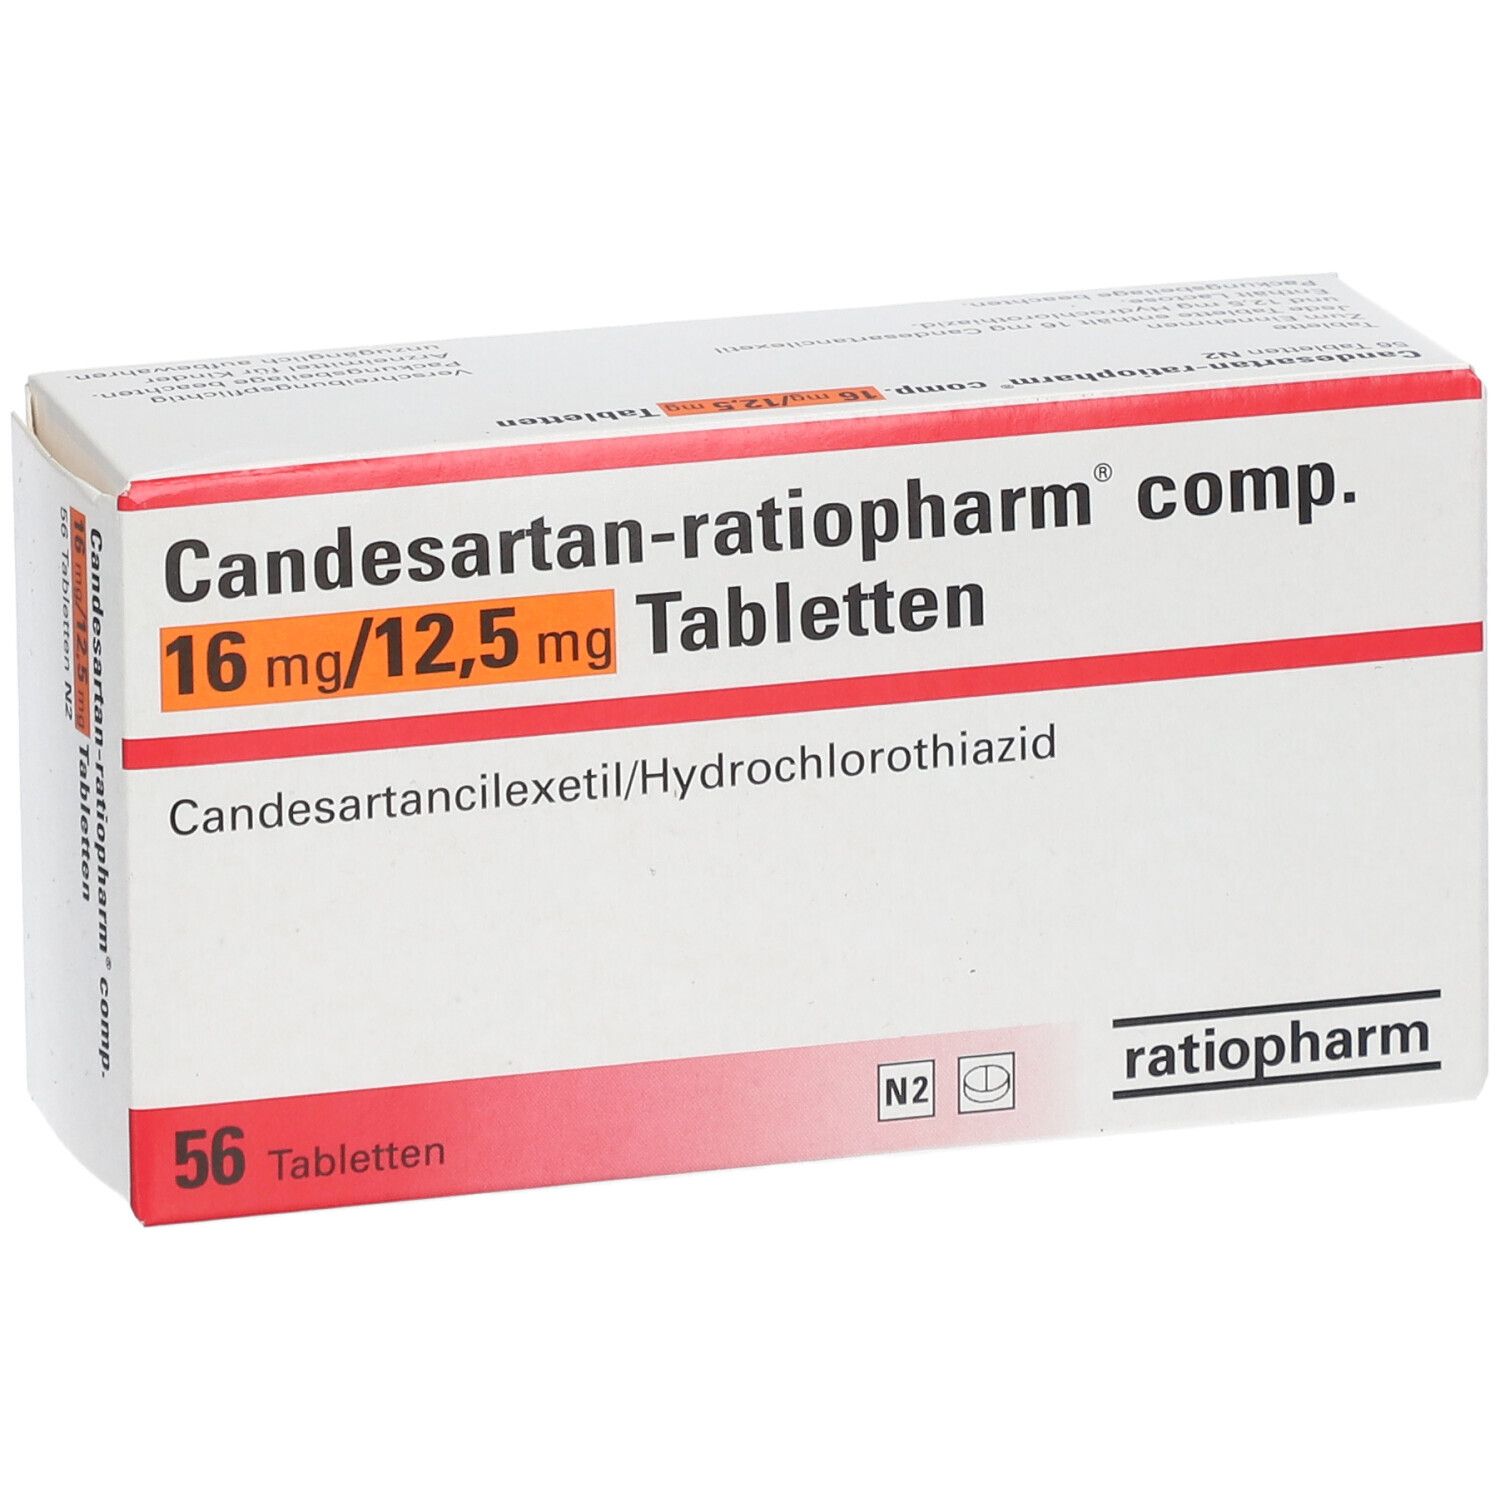 Candesartan-ratiopharm® comp. 16 mg/12,5 mg